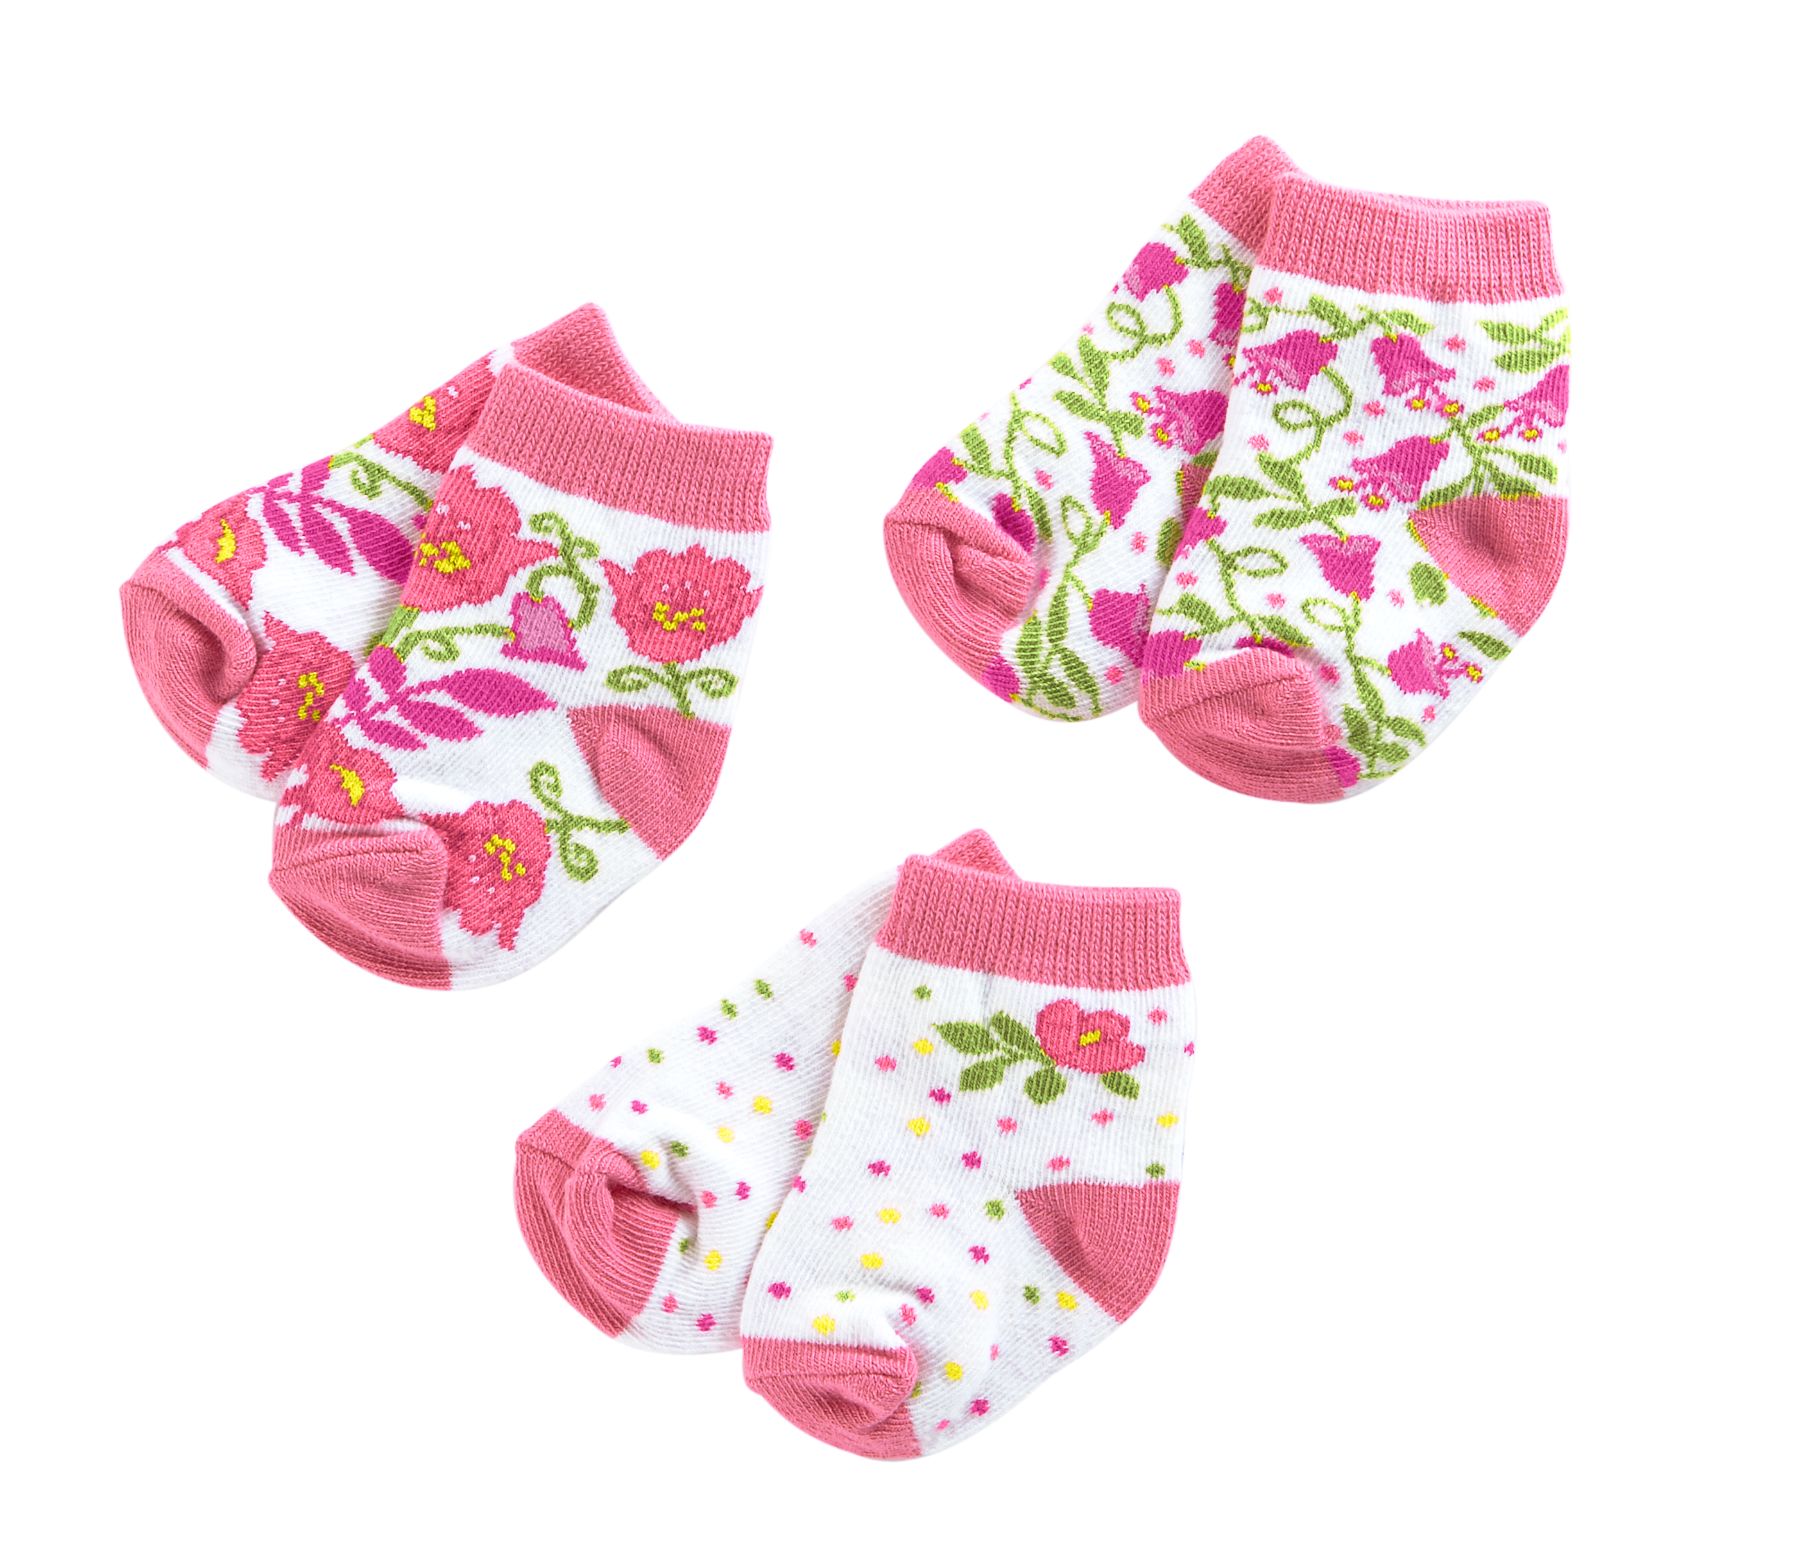 Vera Bradley Baby Socks 3 Pair 0-12M in Lilli Bell